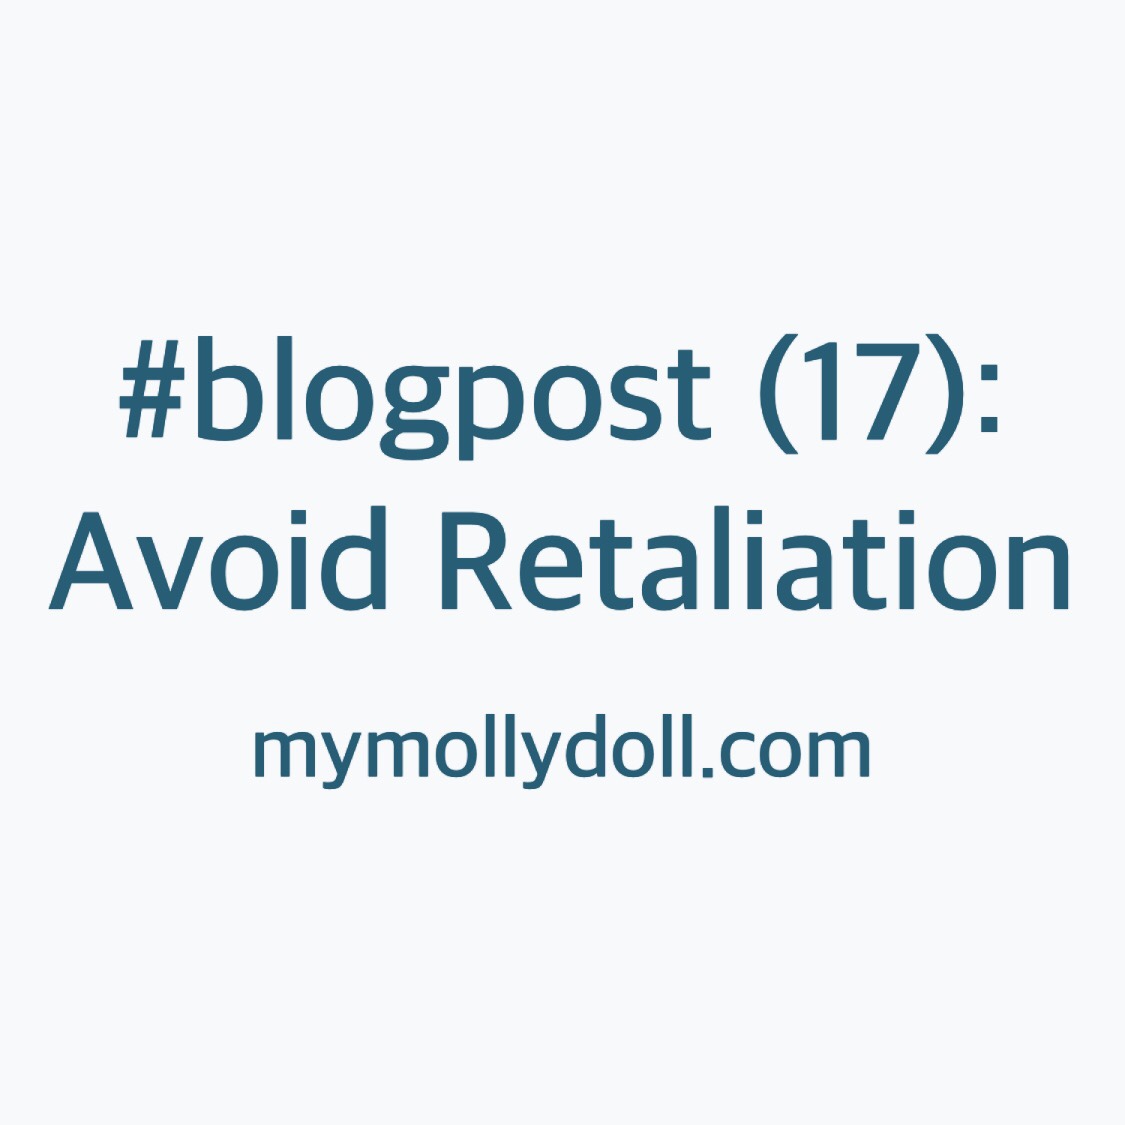 Avoid Retaliation …